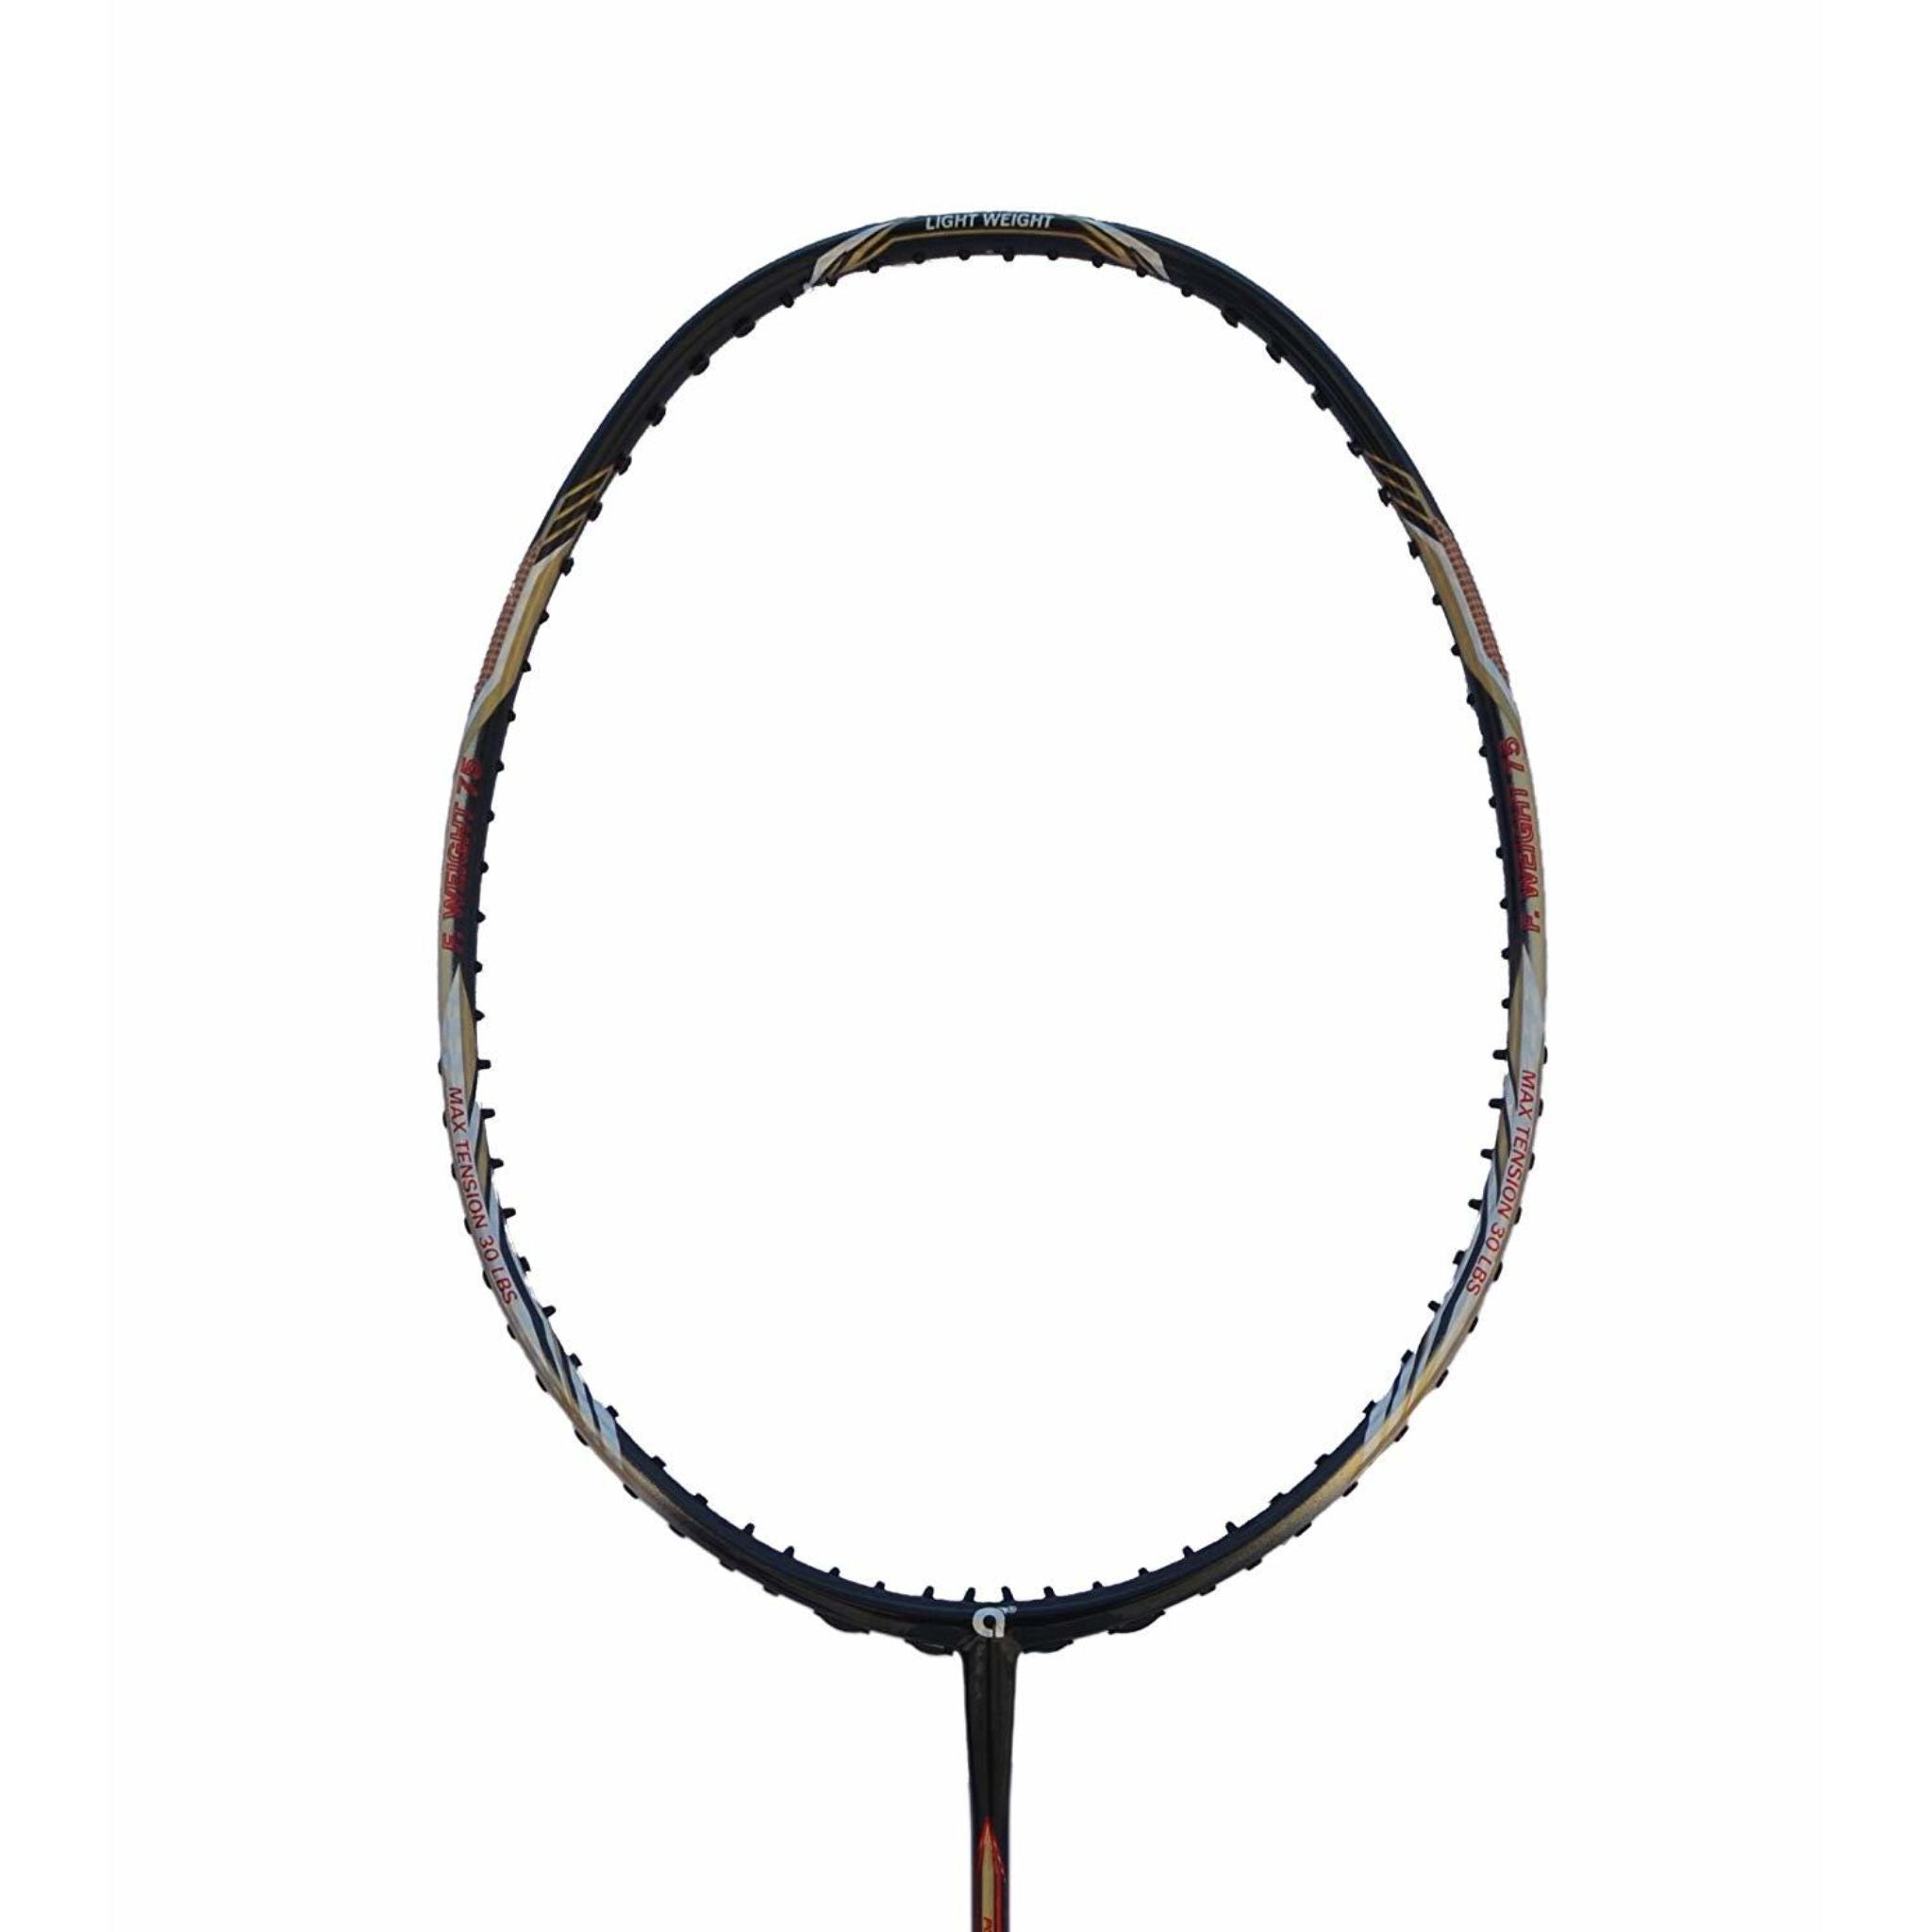 APACS Feather Weight 75 Badminton Racket